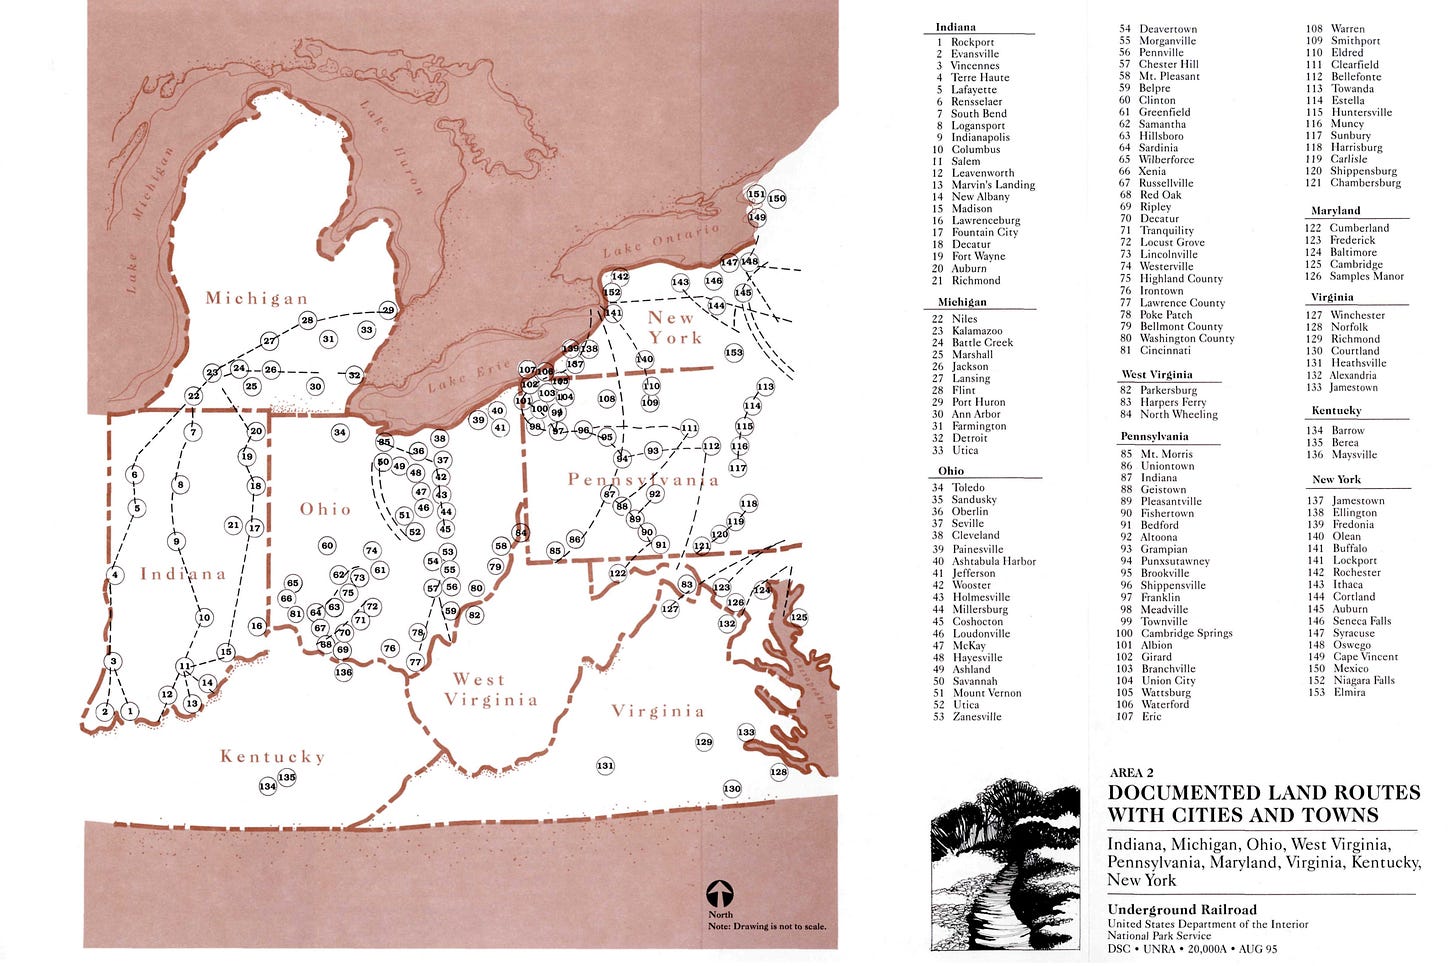 Map of documented "stops" on the Underground Railroad for Indiana, Michigan, Ohio, West Virginia, Pennsylvania, Maryland, Virginia, Kentucky, New York